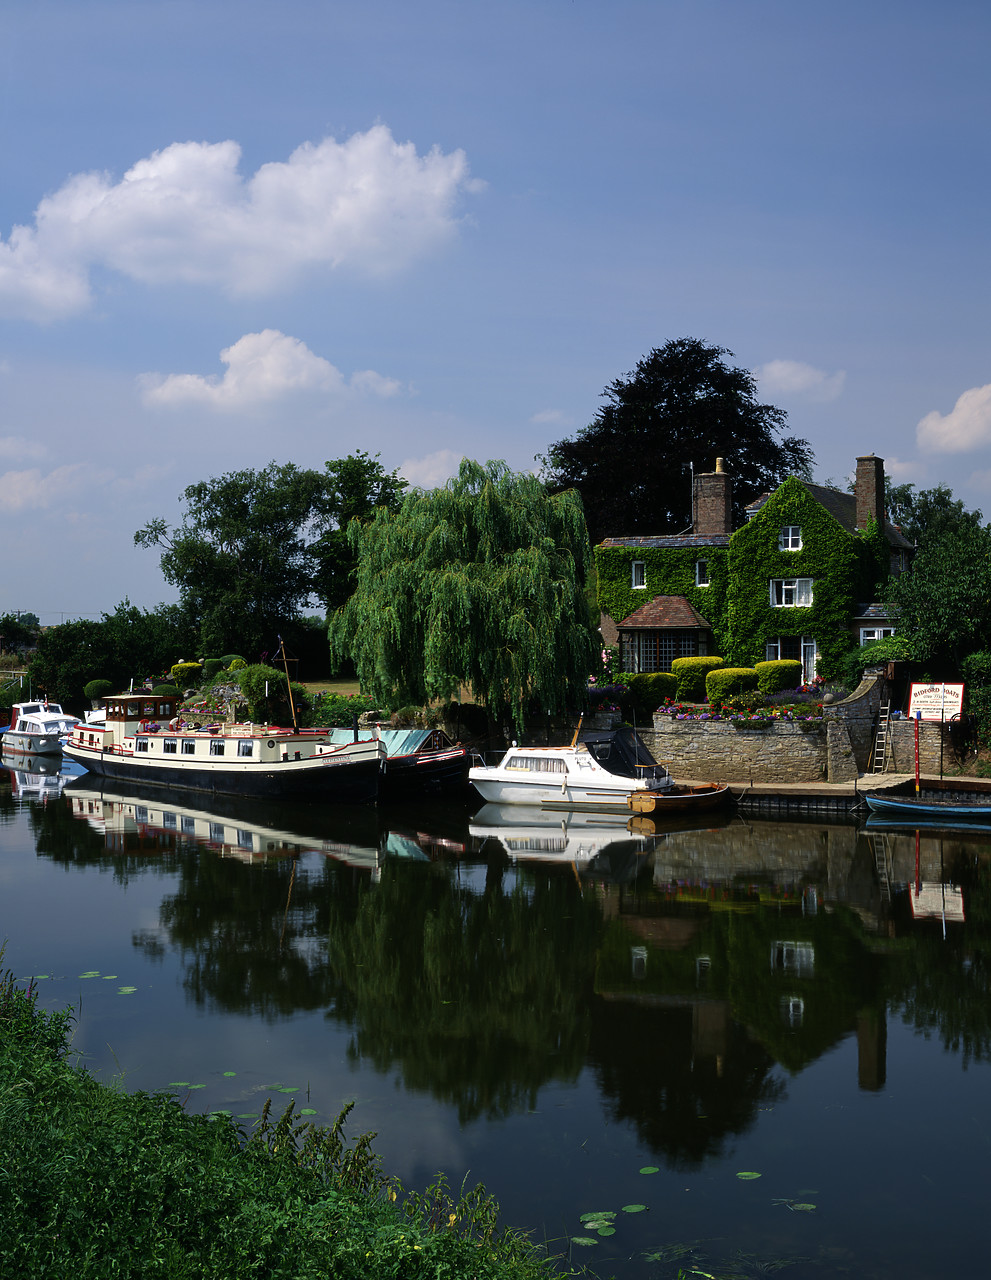 #944802-4 - The River Avon Reflections, Bidford-on-Avon, Warwickshire, England